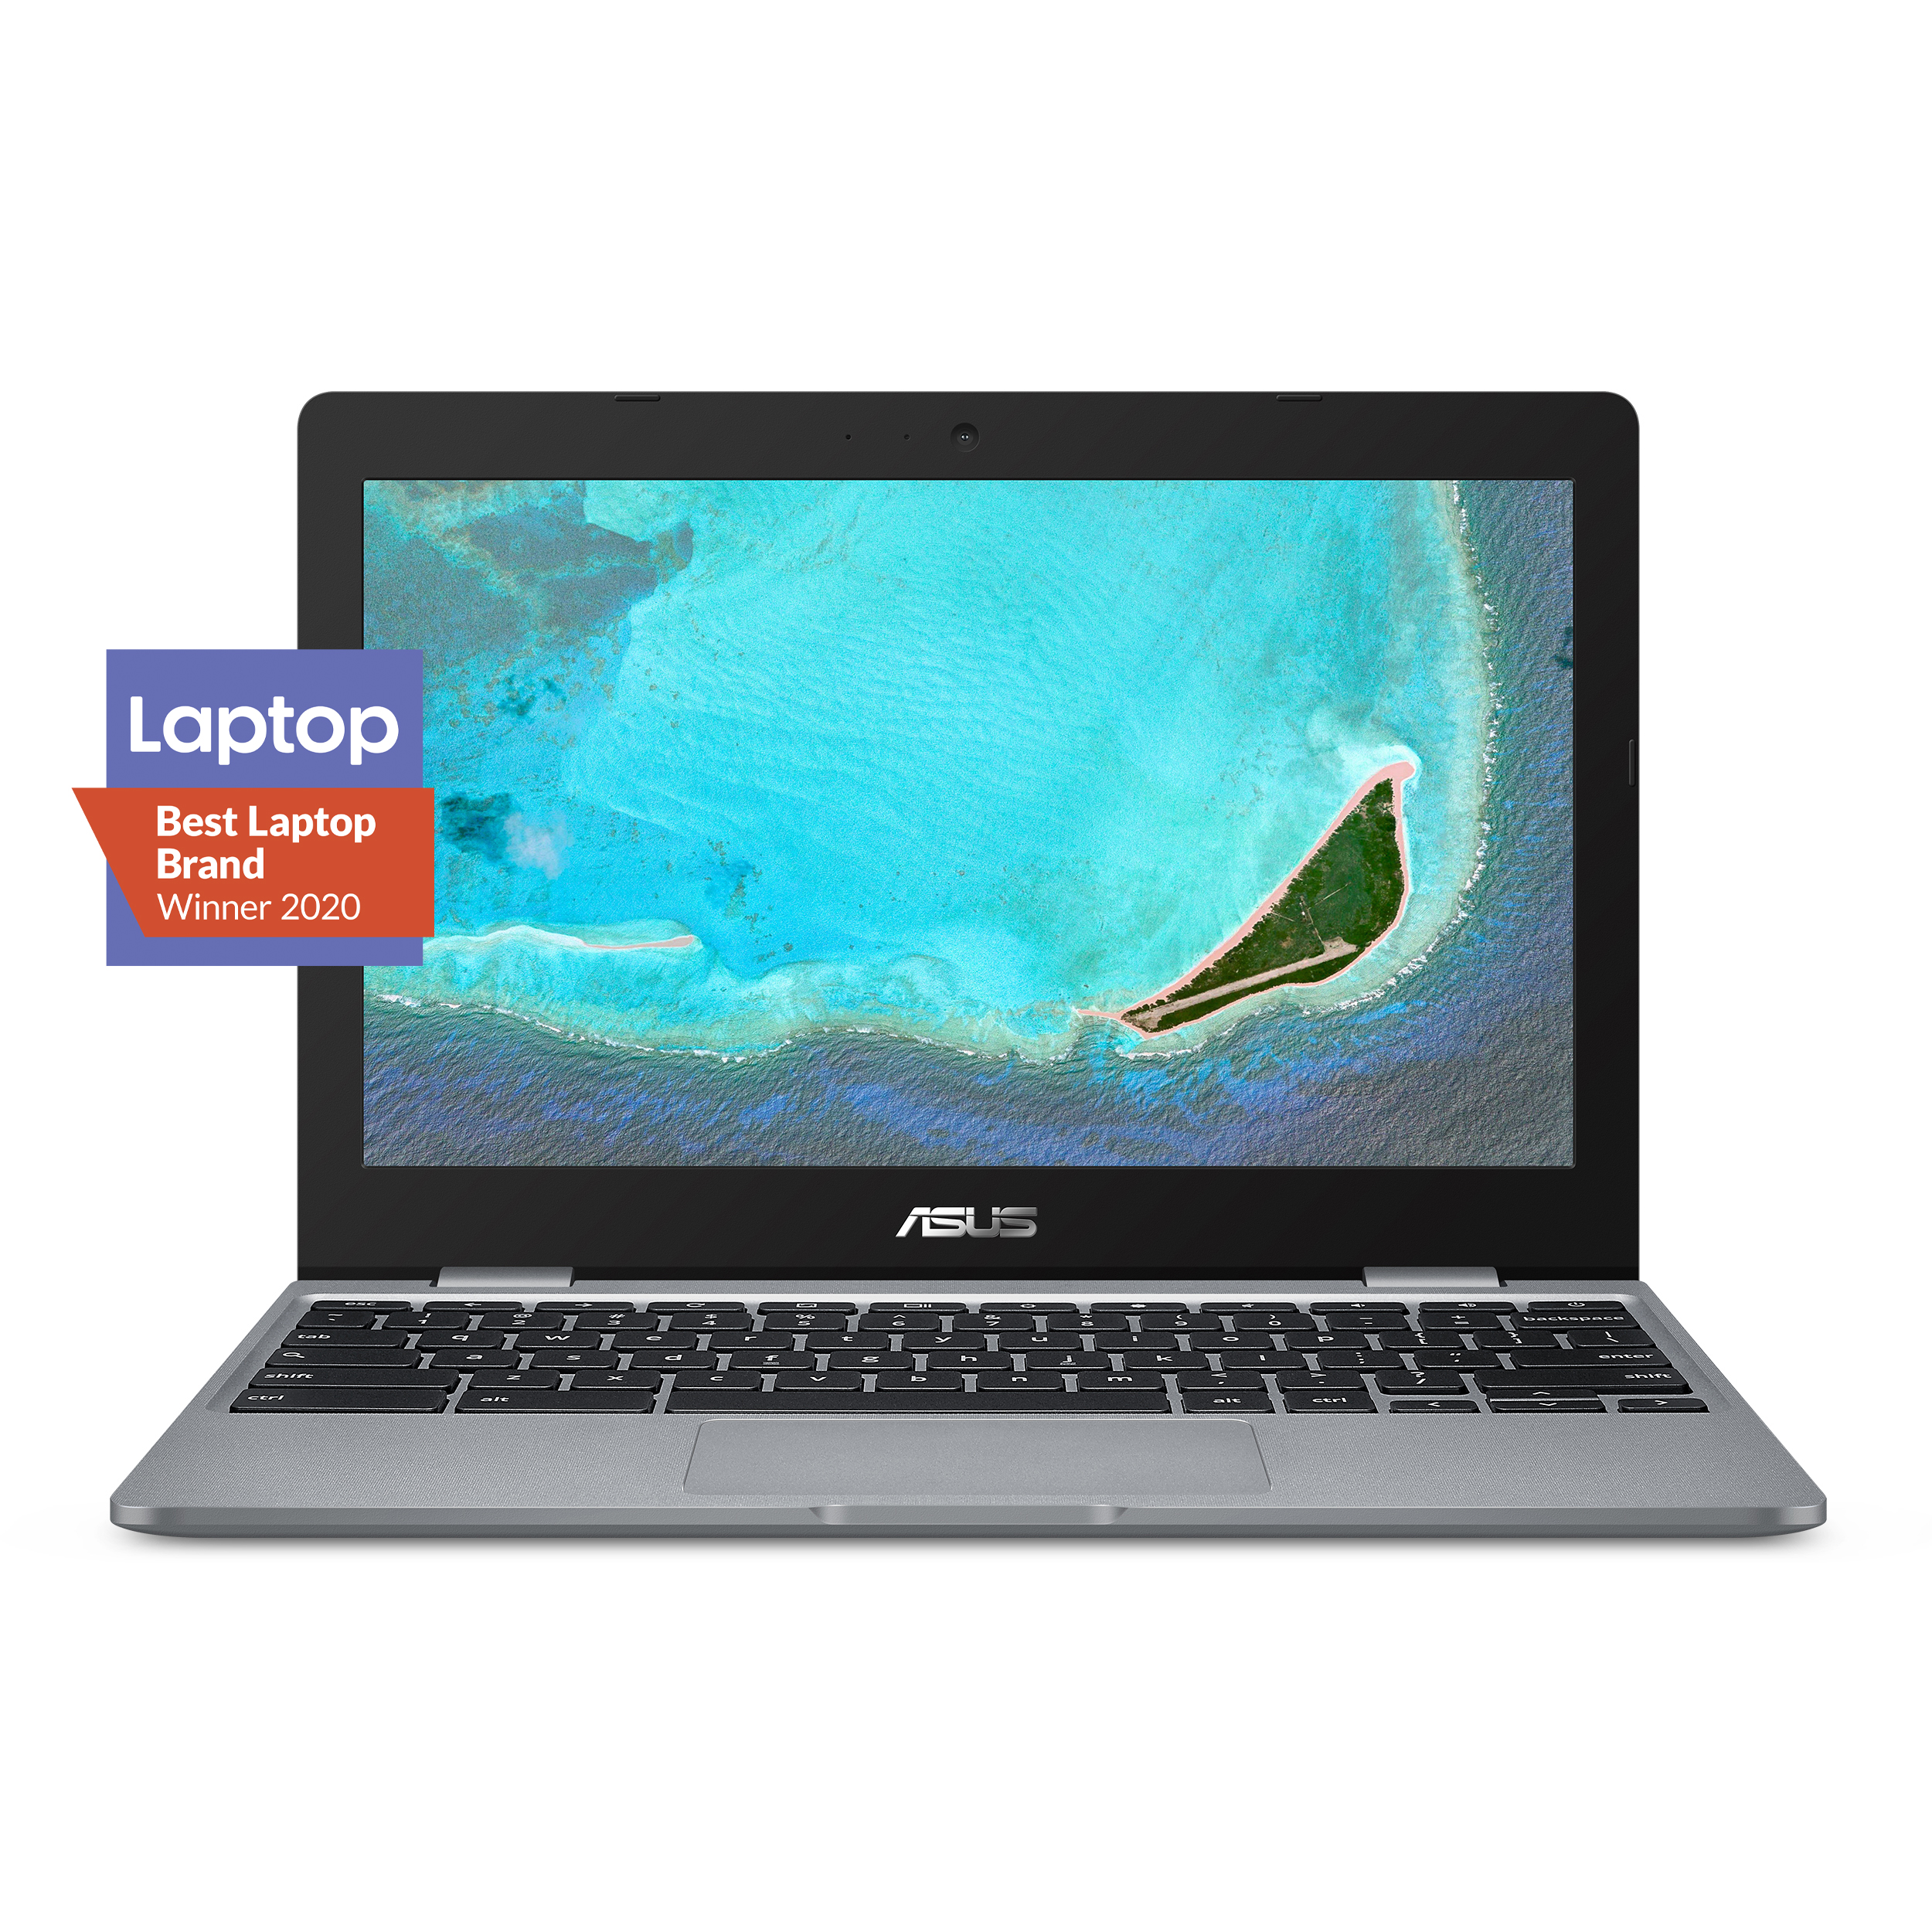 ASUS C223NA Chromebook, 11.6" Intel Celeron N3350, 4GB RAM, 32GB eMMC, Chrome OS, Gray, C223NA-DH02 - image 1 of 2